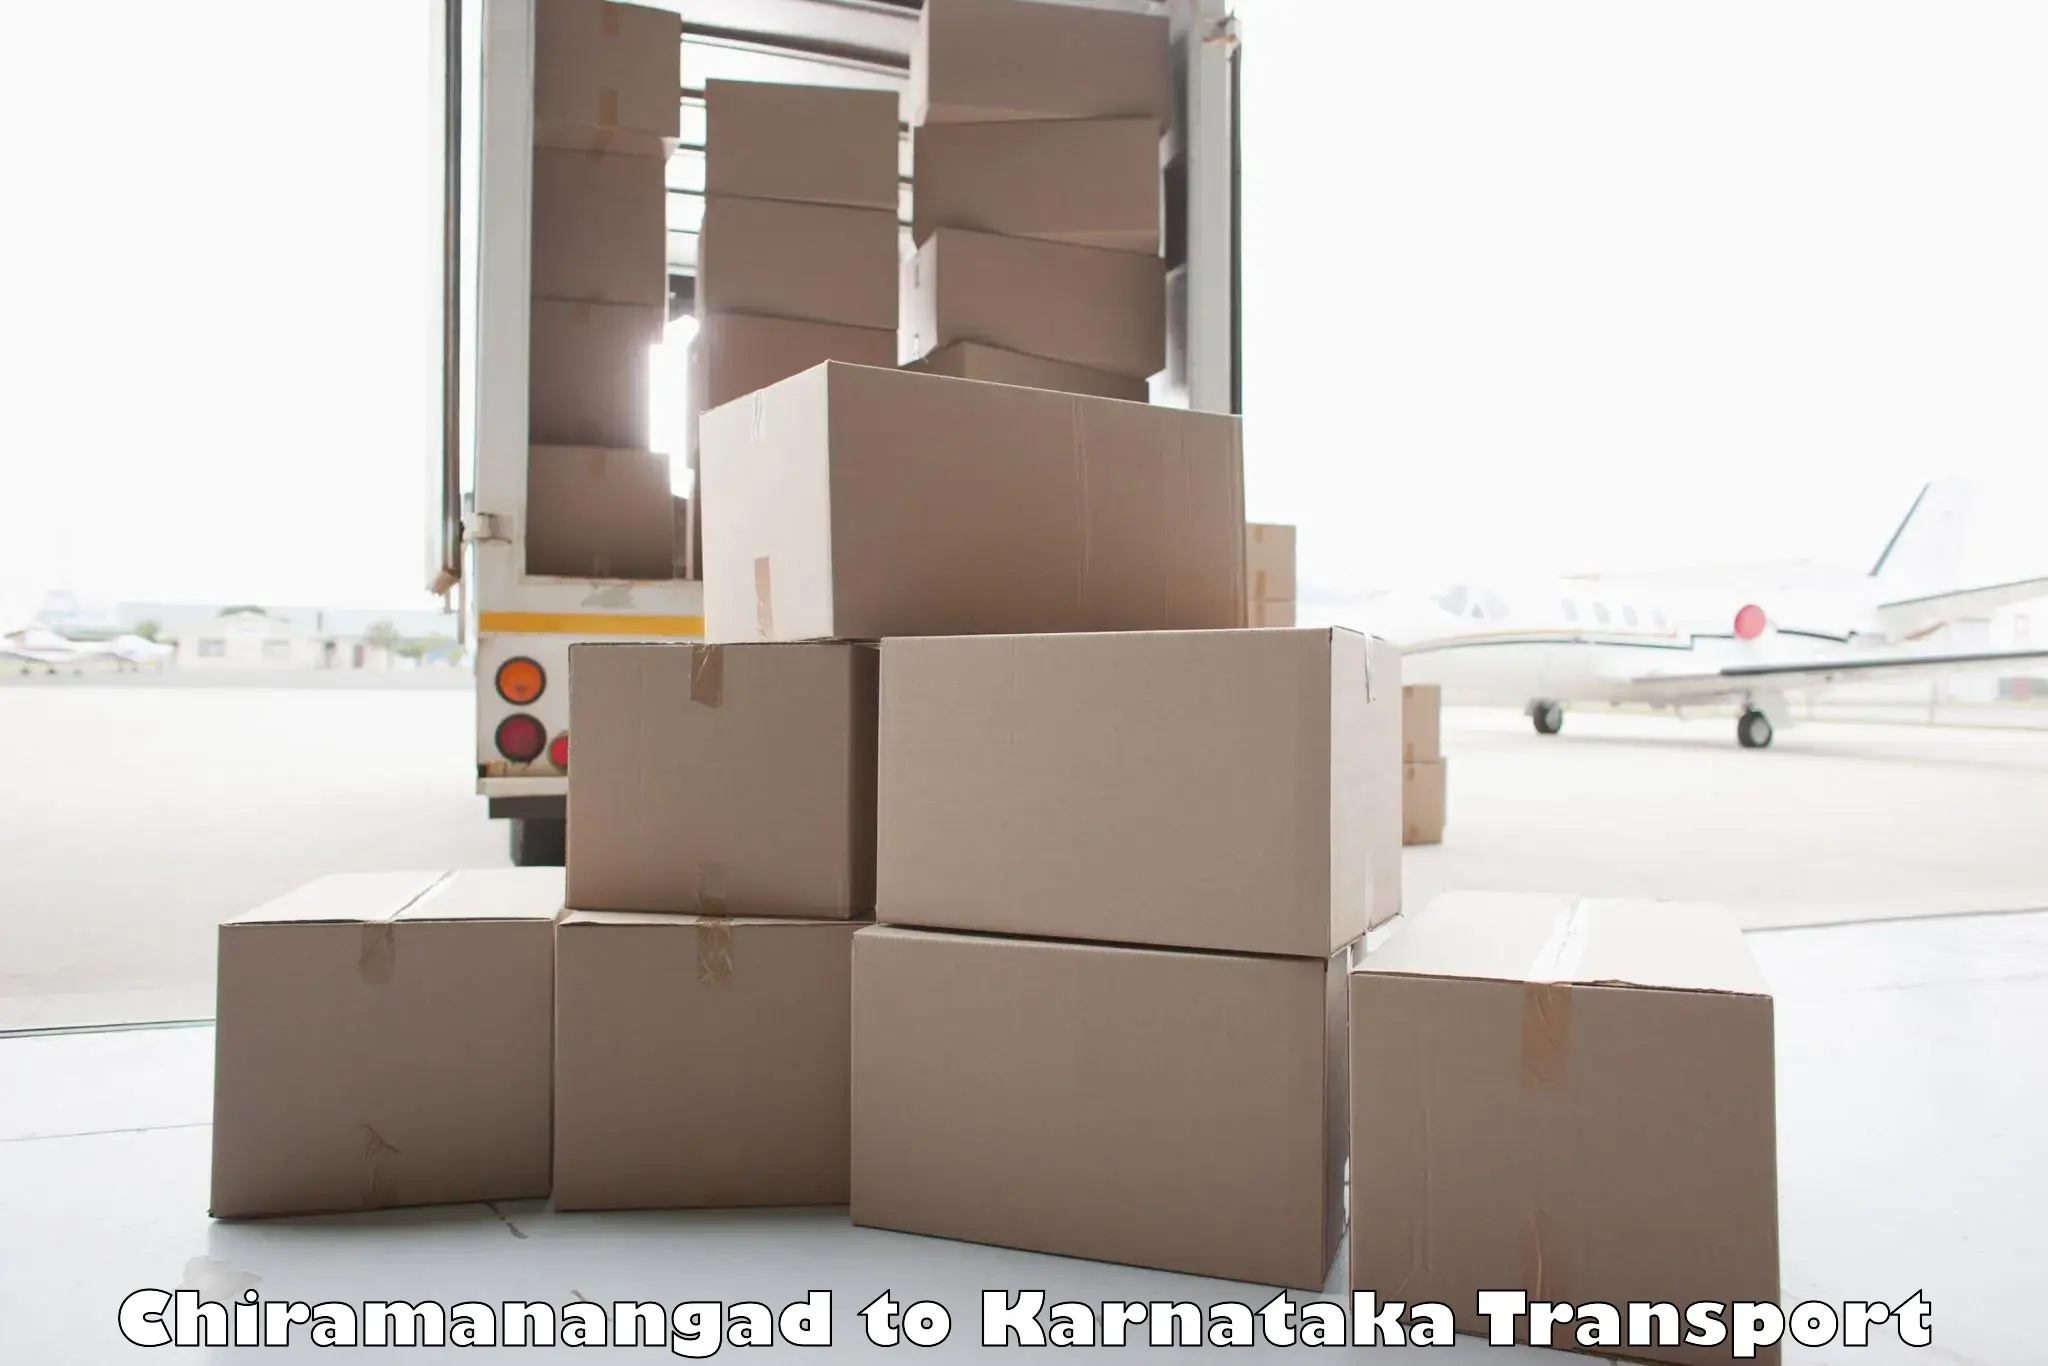 Delivery service in Chiramanangad to Hagaribommanahalli